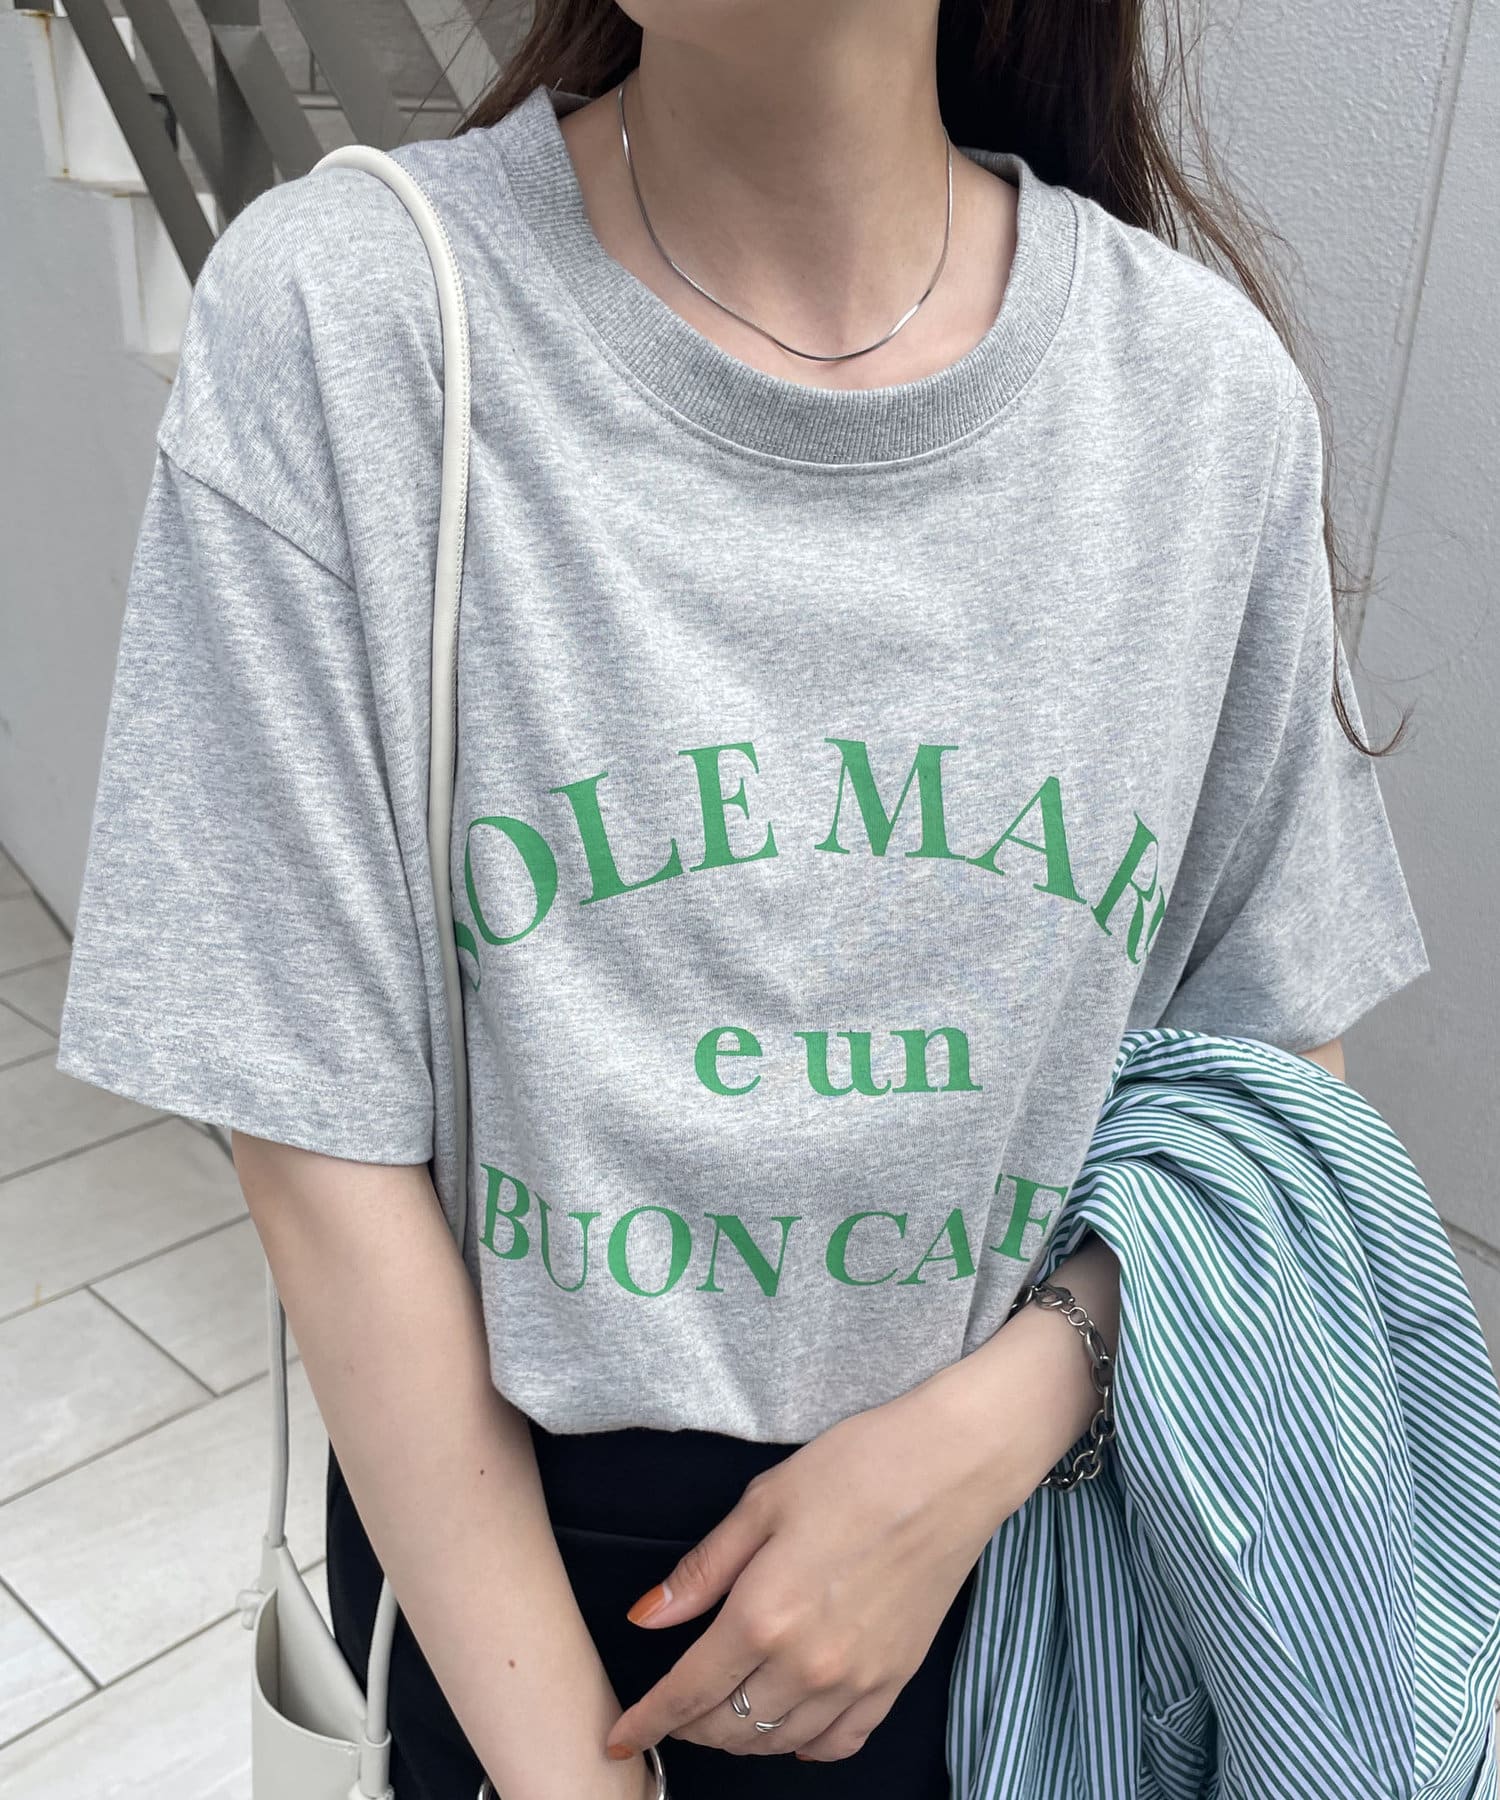 Discoat(ディスコート) 【追加販売決定！】SOLE MARETシャツ